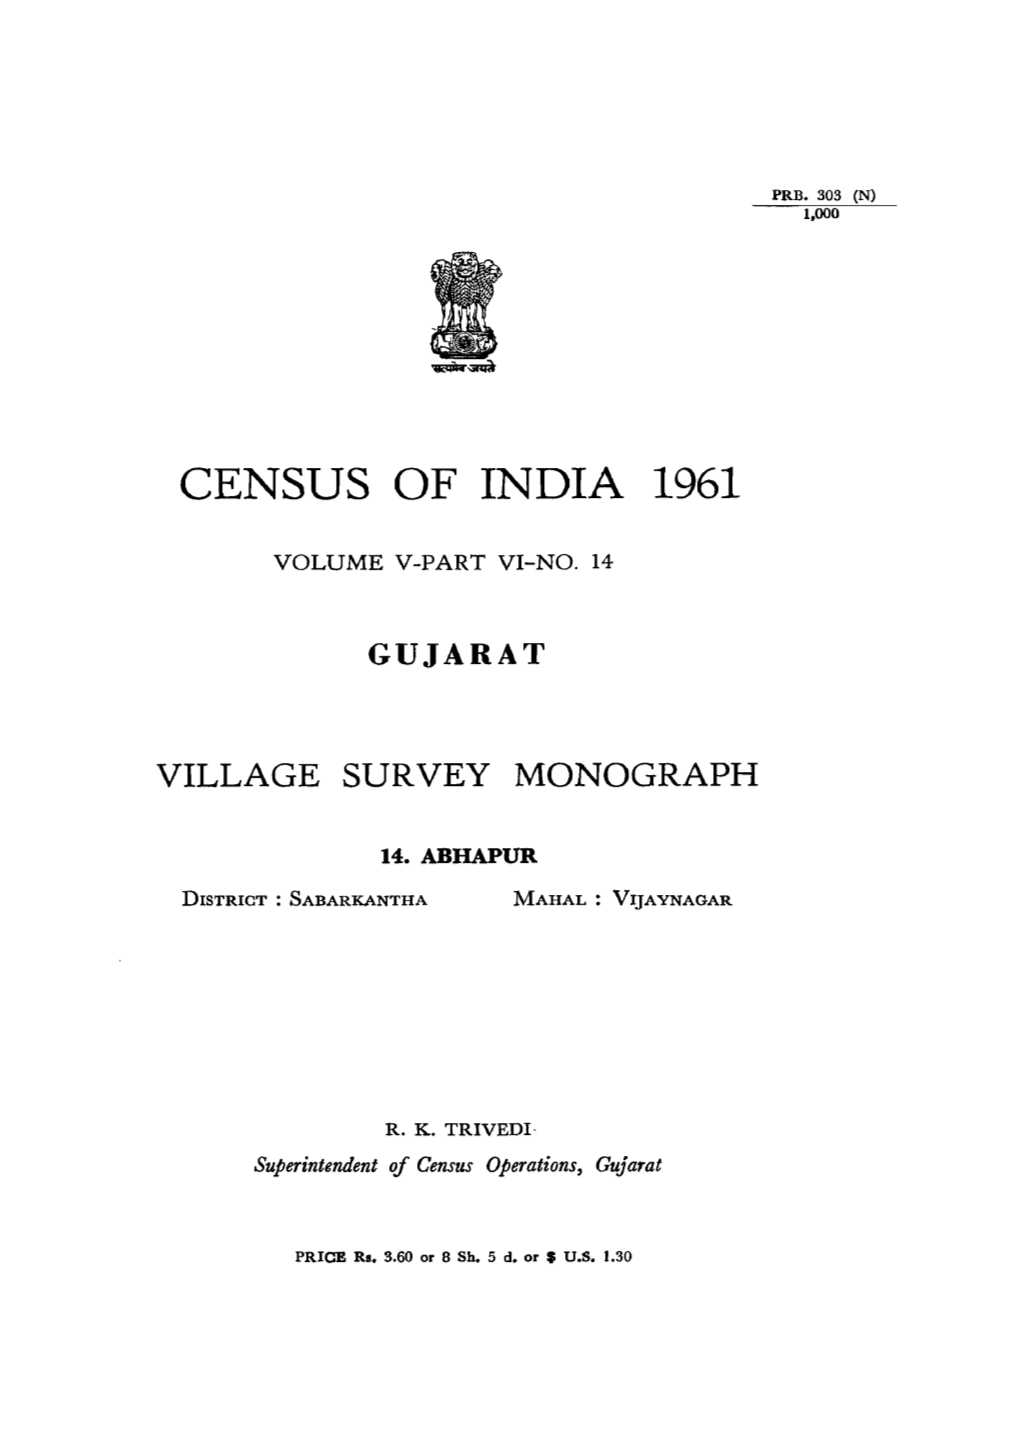 Village Survey Monograph, 14 Abhapur, Part VI, Vol-V